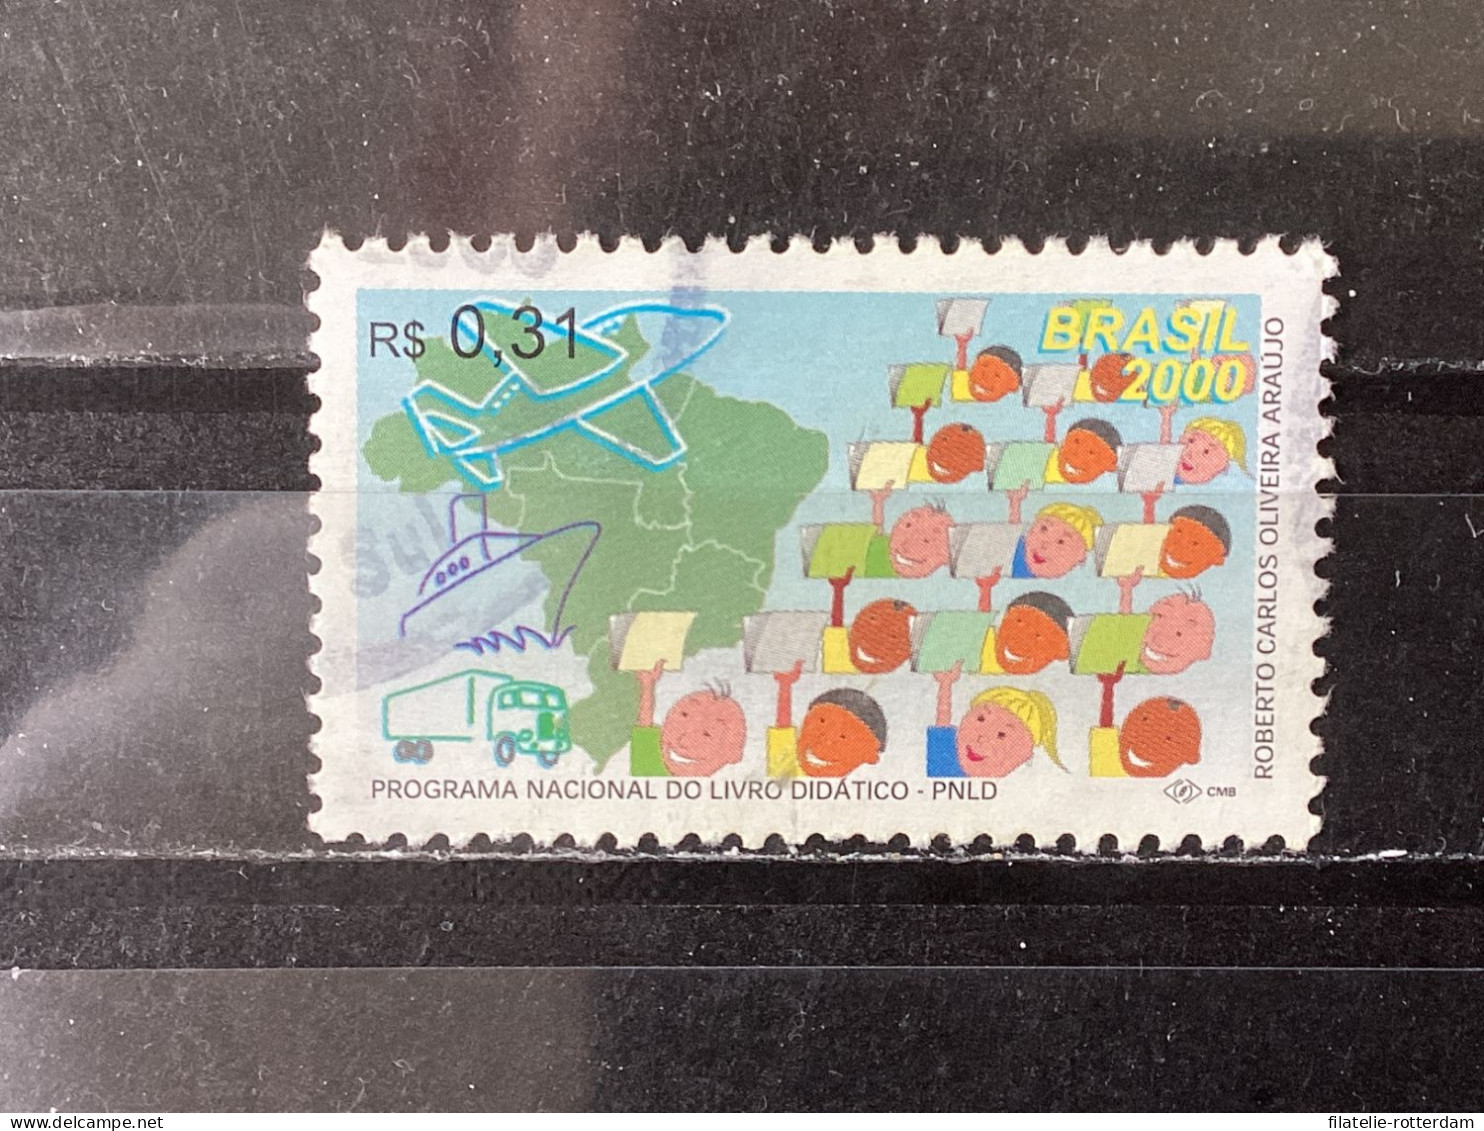 Brazil / Brazilië - School Books (0.31) 2000 - Used Stamps